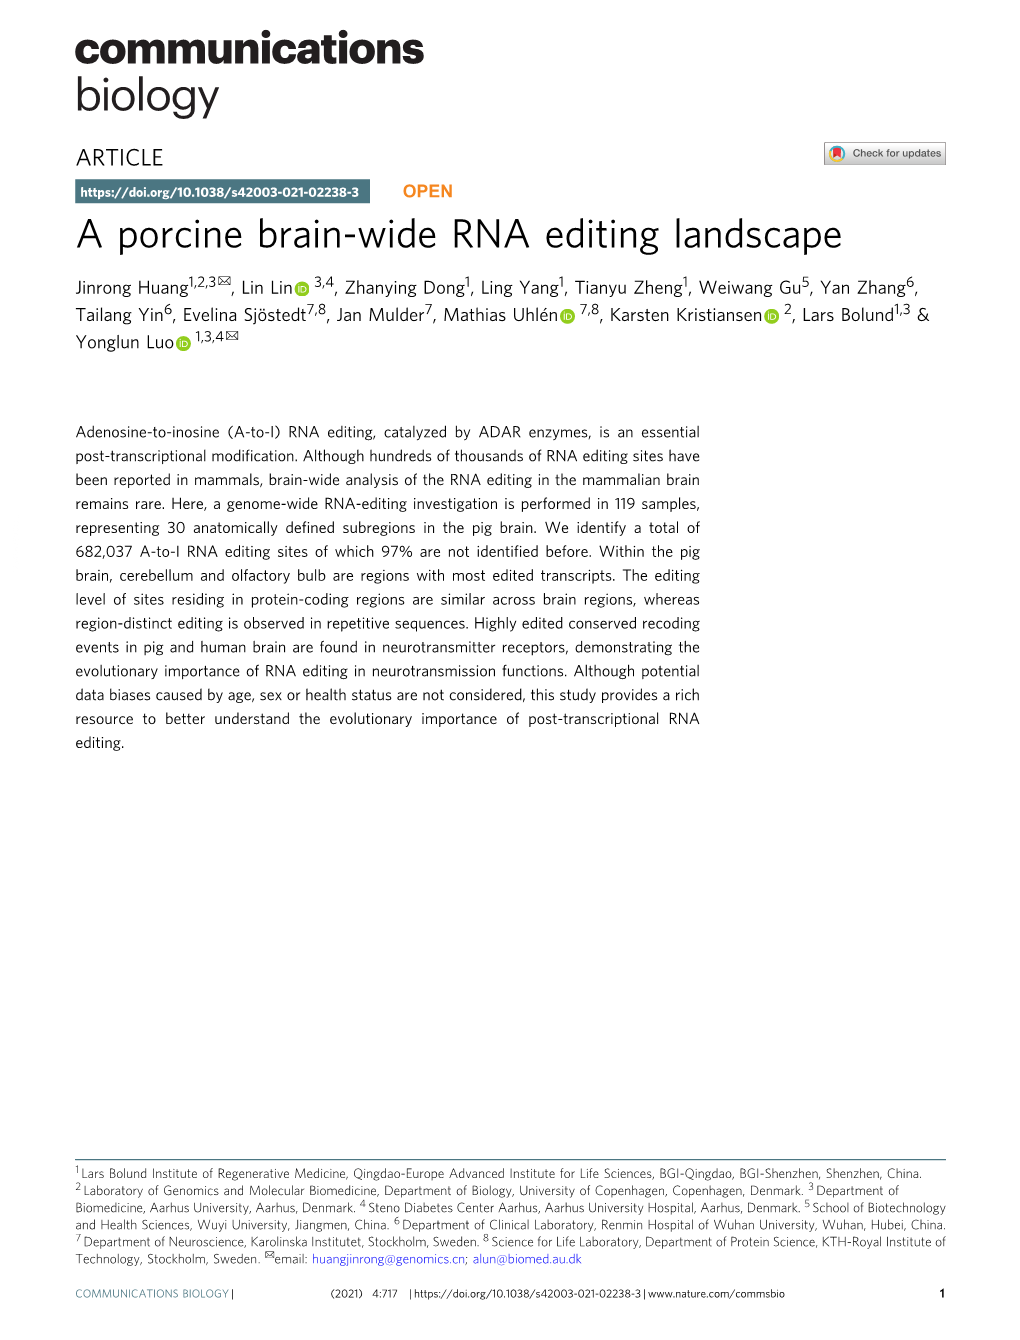 A Porcine Brain-Wide RNA Editing Landscape